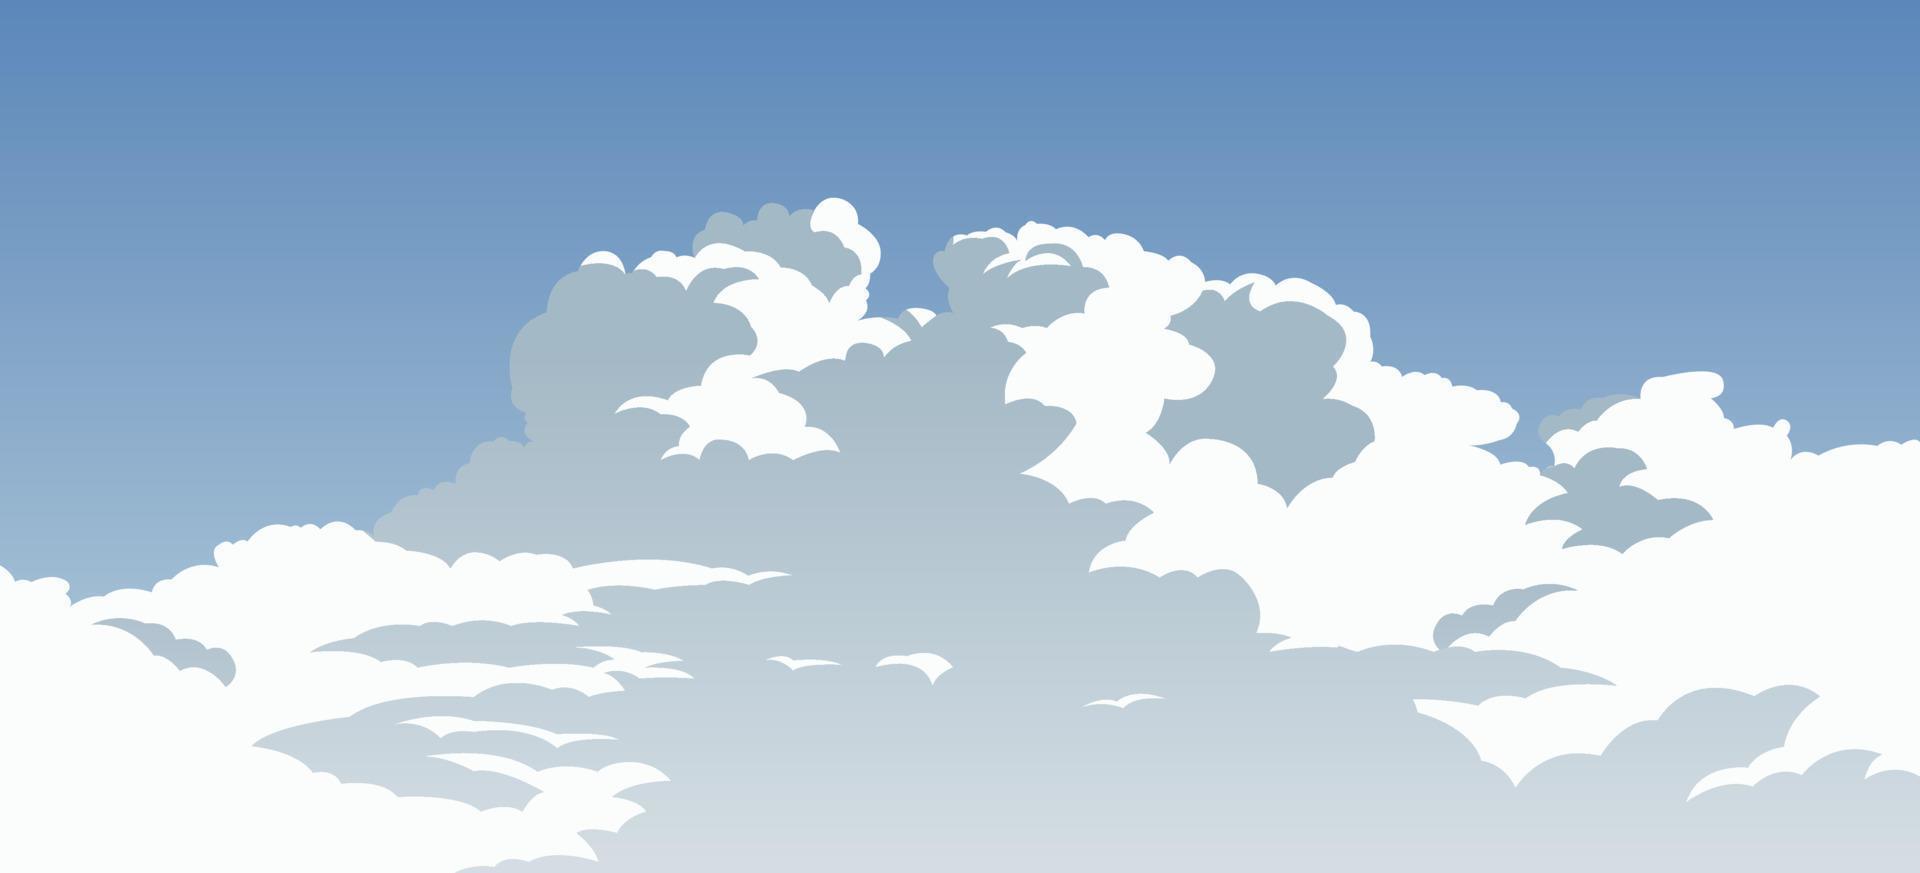 versione cartoon di un bel cielo blu nuvoloso vettore